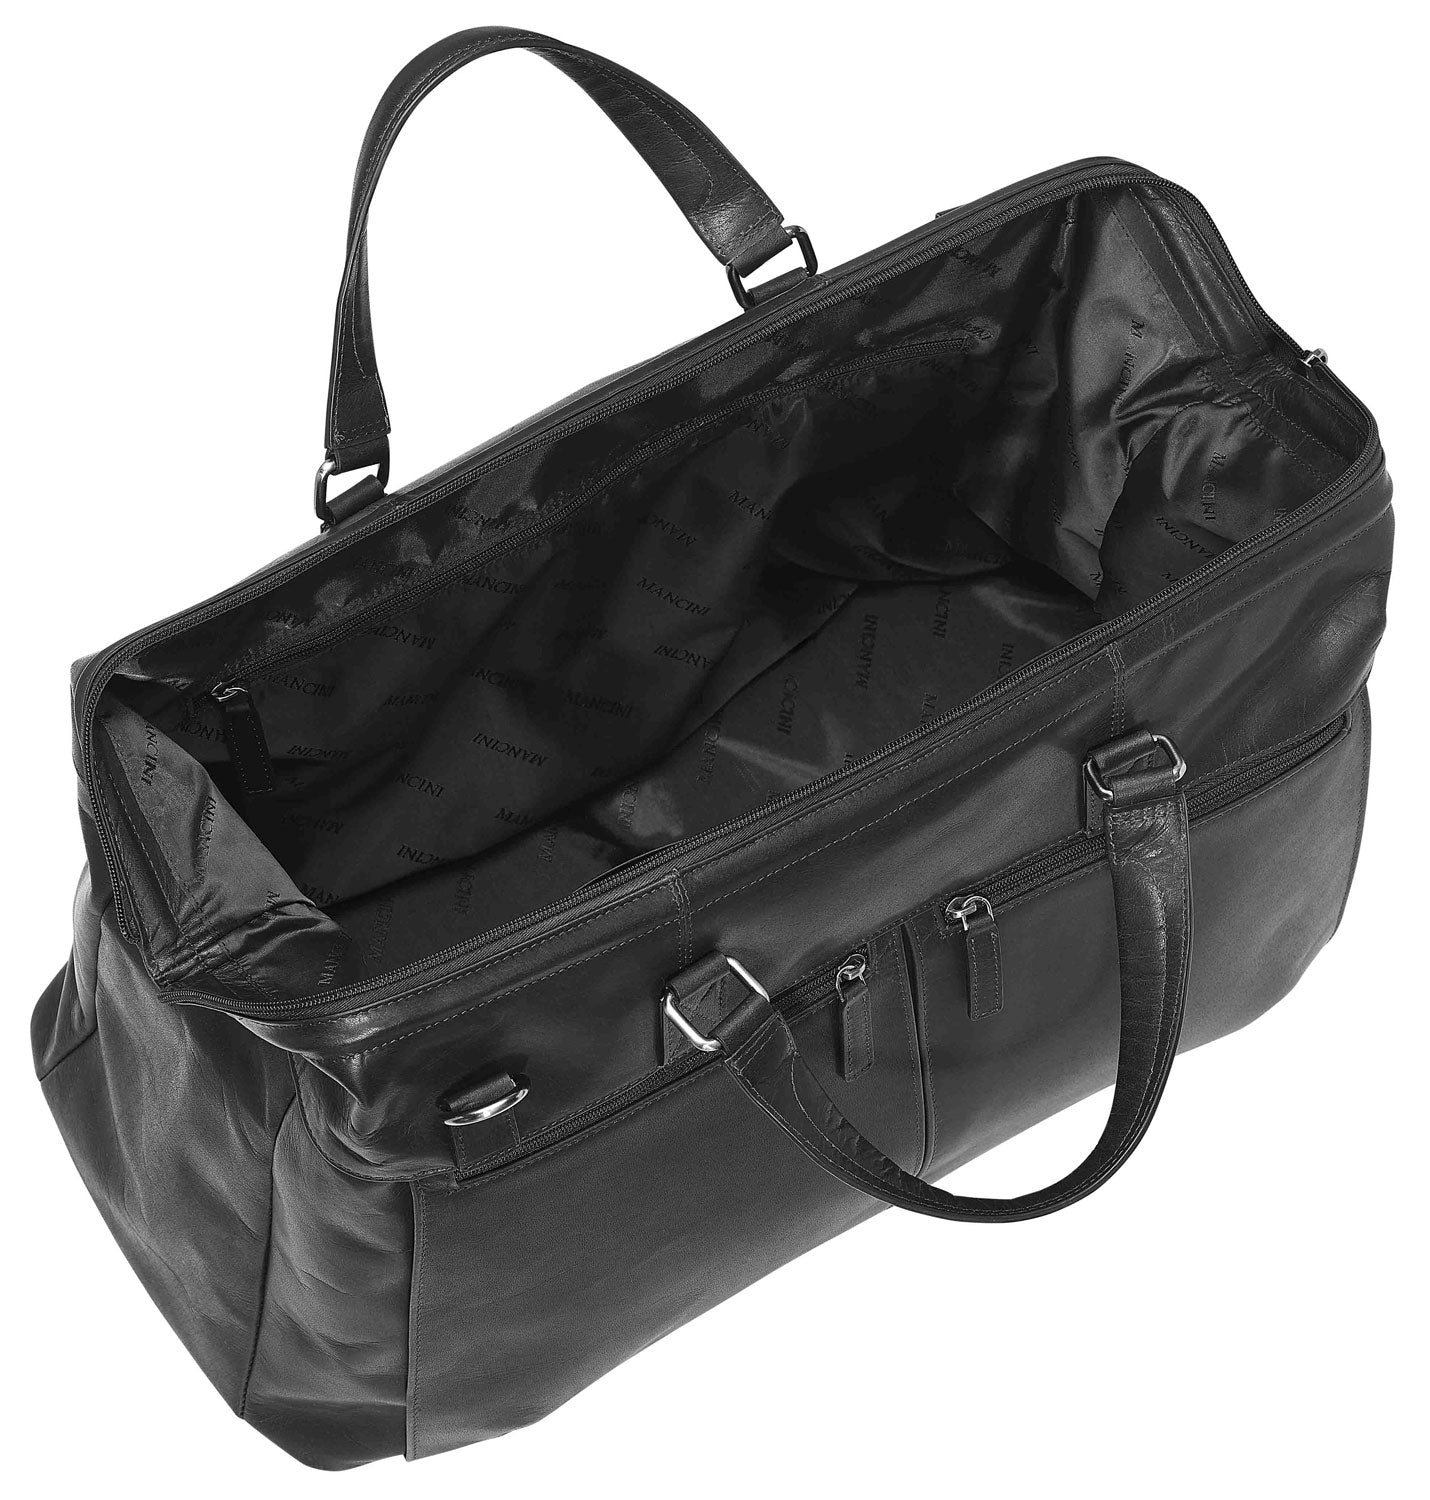 Mancini Leather Classic Carry-on Duffle Bag, 20" x 10" x 13.5", Black